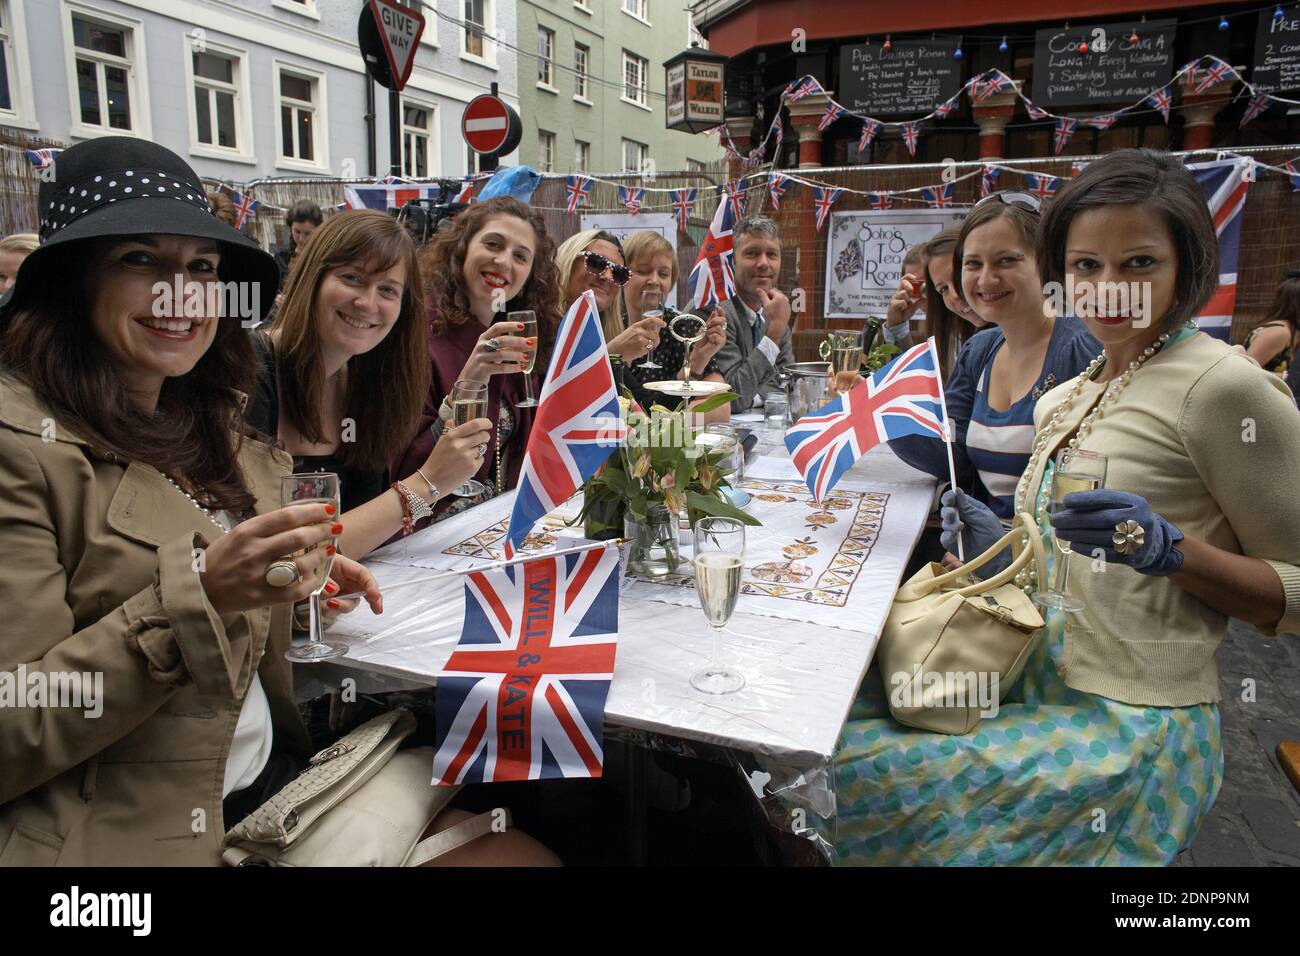 Royal Wedding Street Party celebrating the wedding of Prince William and Kate Middleton, London, UK Stock Photo